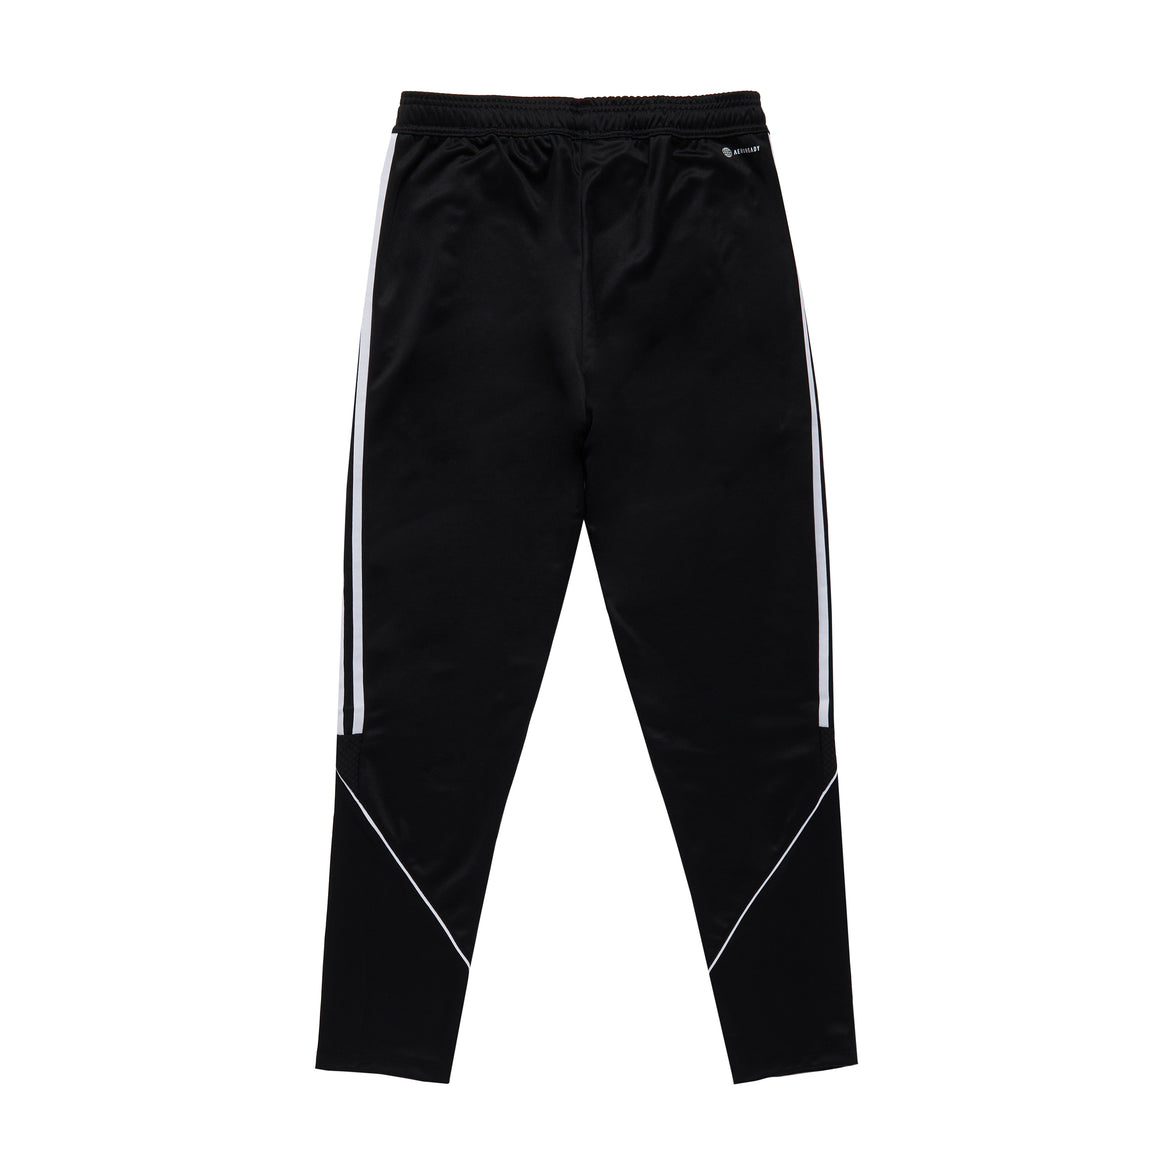 Adidas x 424 MLS Tiro23 League Pant (Black) - Adidas x 424 MLS Tiro23 League Pant (Black) - 